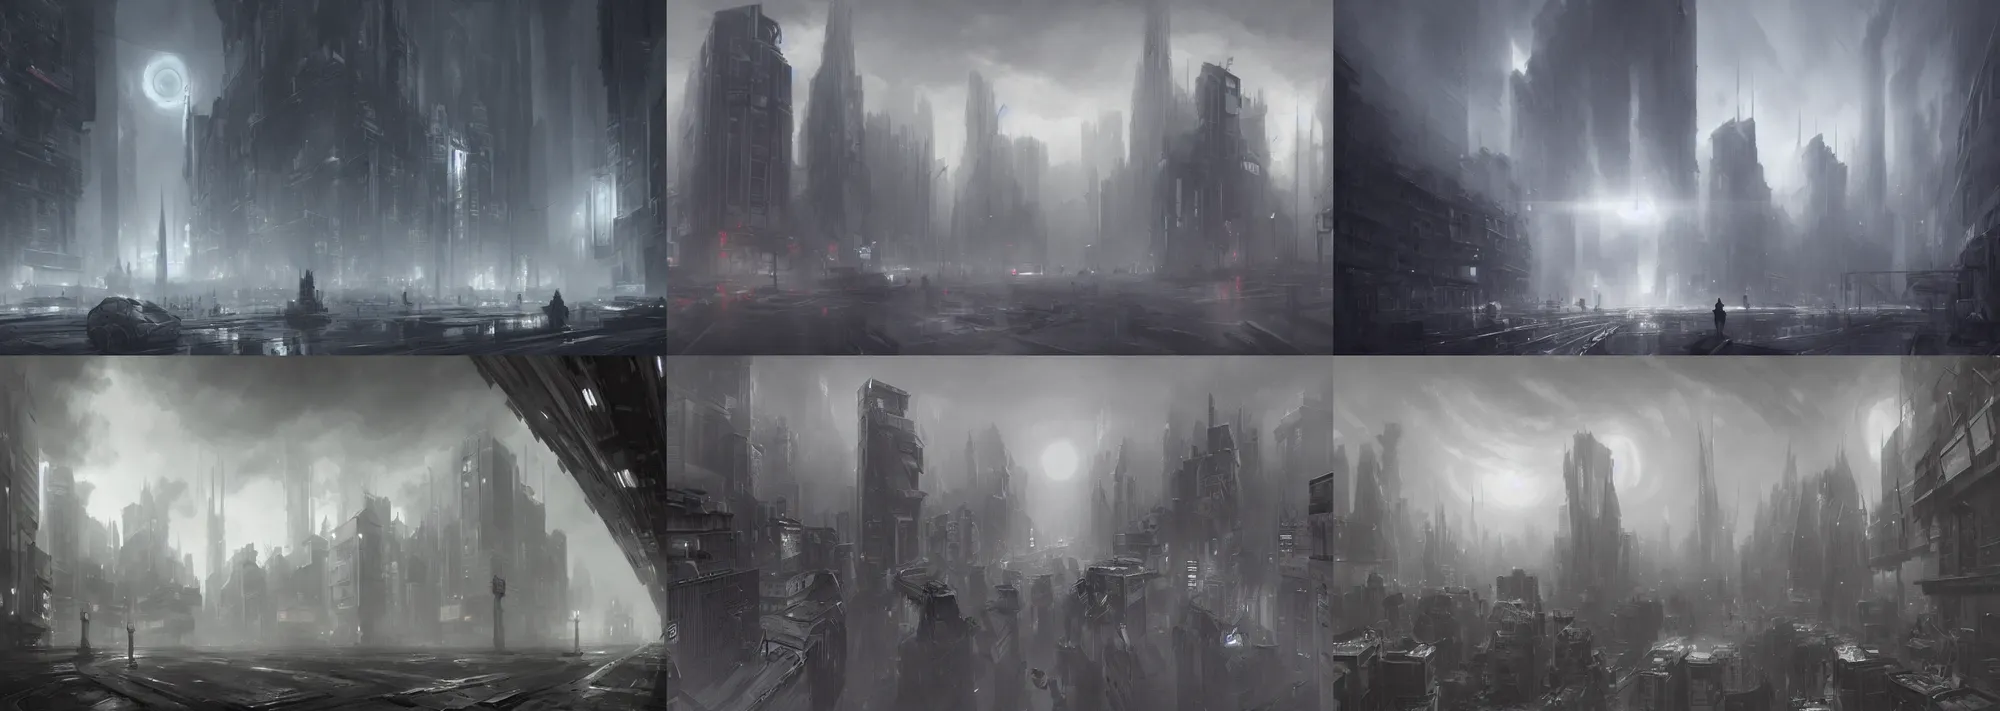 Prompt: bleak grey city with a portal in the center, dramatic lighting, by grek rutkowski, trending on artstation